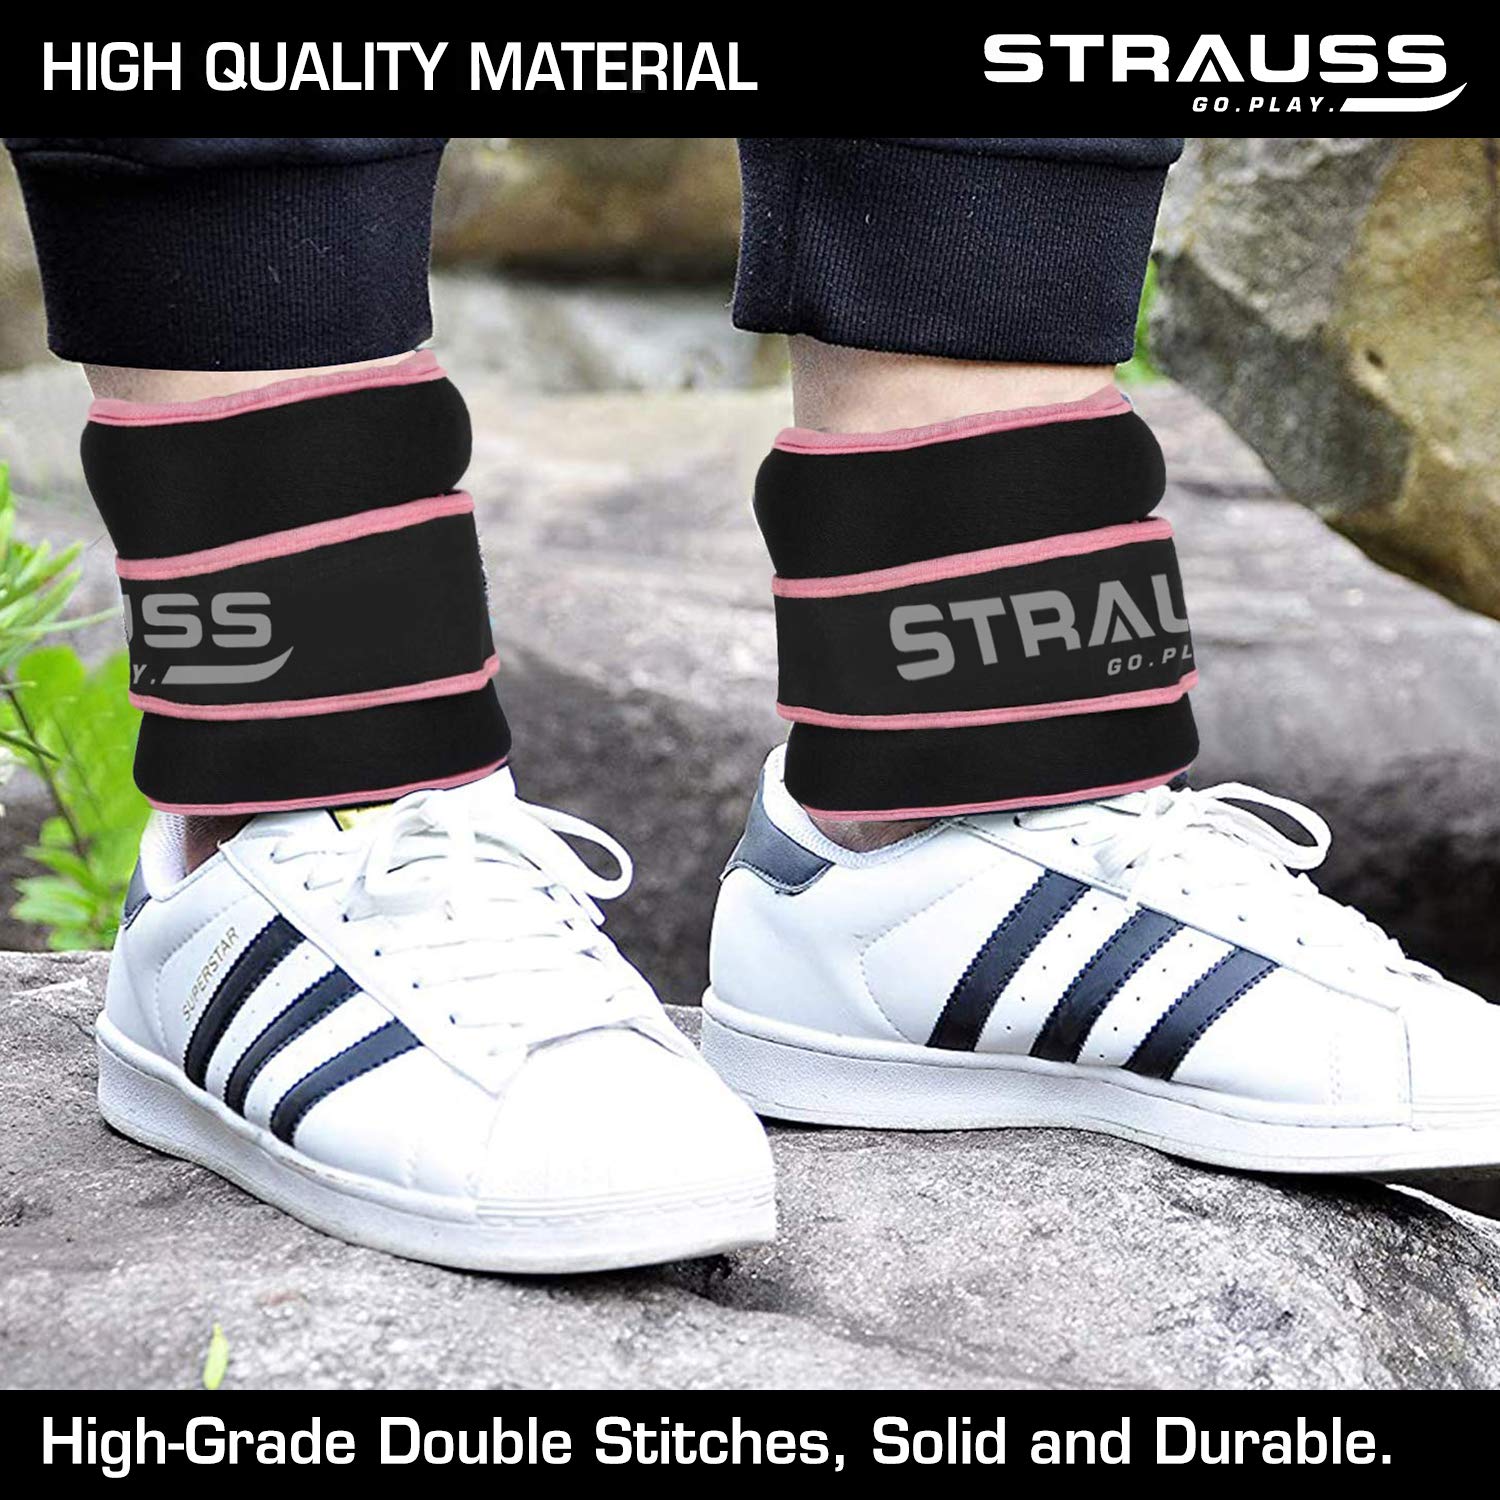 Strauss Round Shape Ankle Weight, 1 Kg (Each), Pair, (Pink)